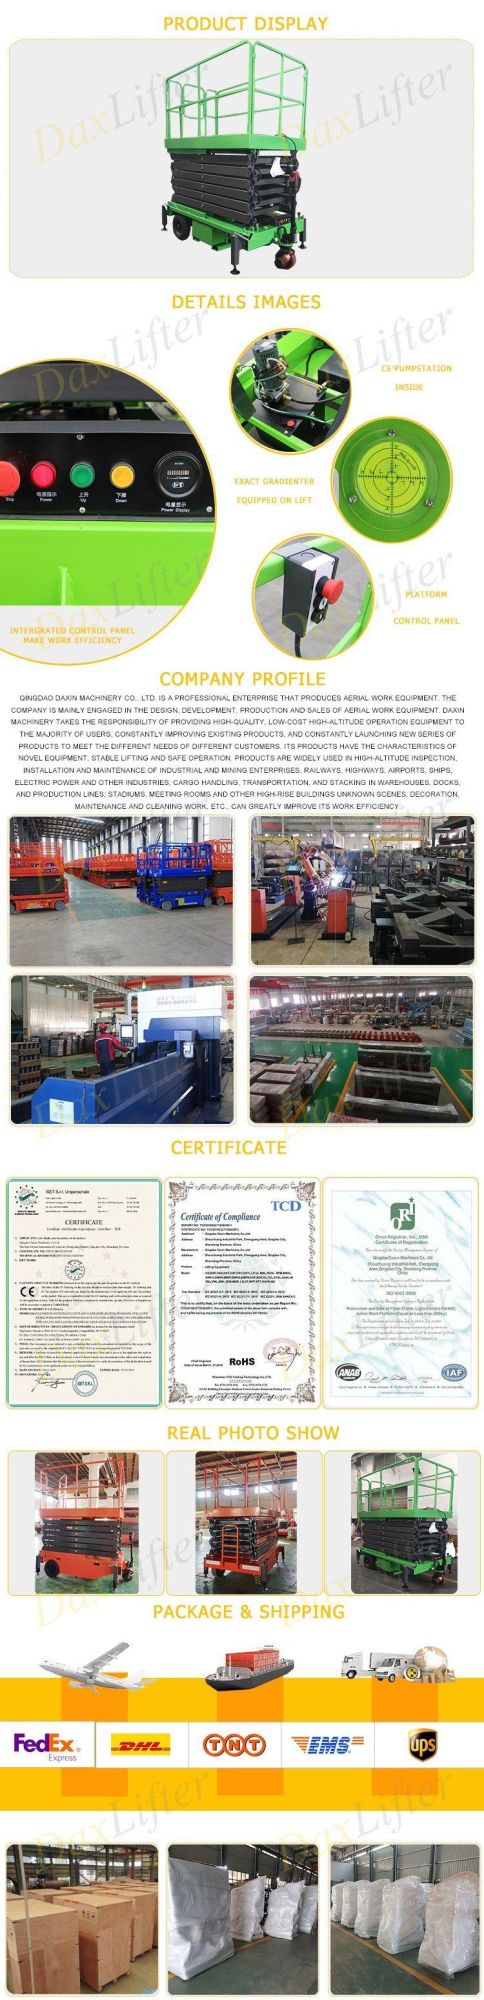 China Daxlifter Brand 6-18m 500kg High-Altitude Work Platforms